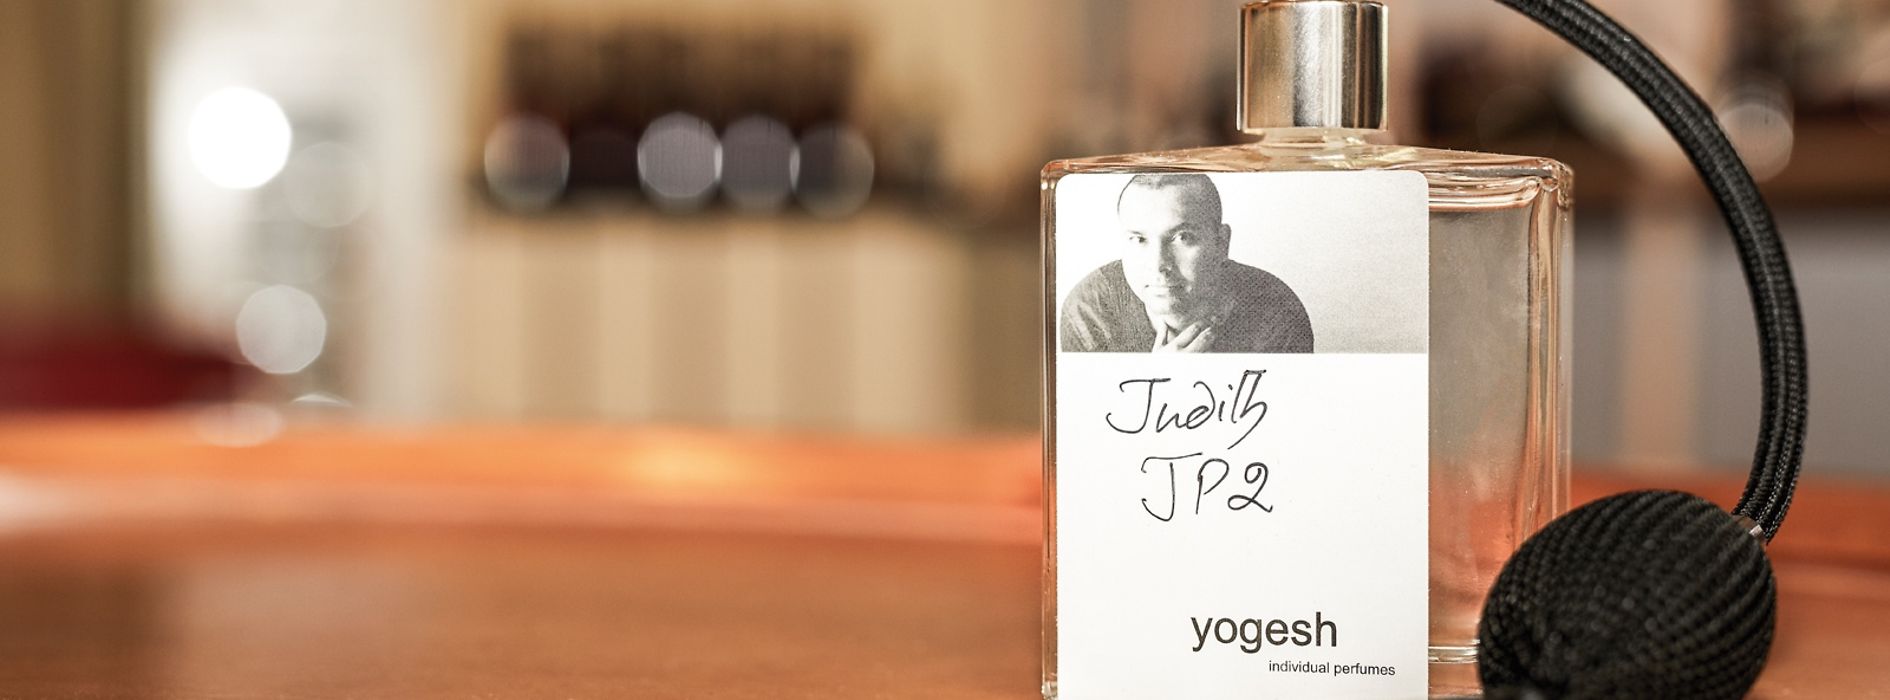 yogesh Parfums, frasco